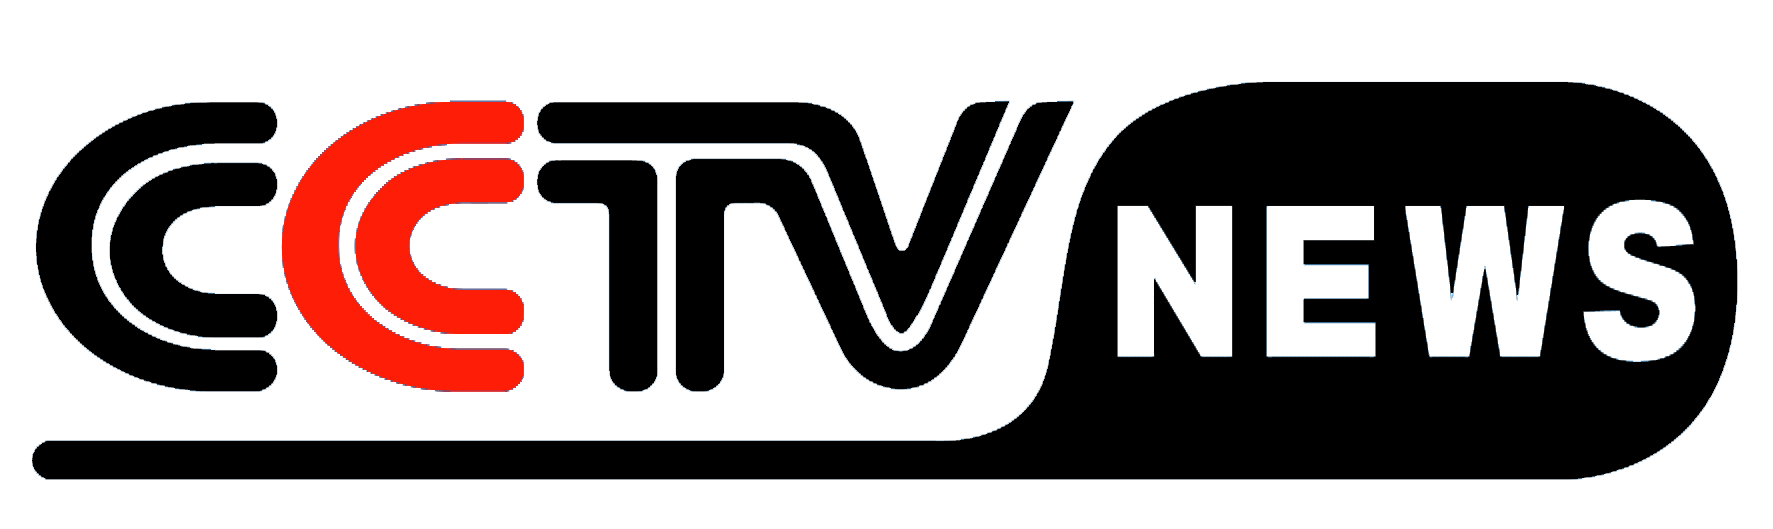 CC TV News - A Display Rights Content Partner